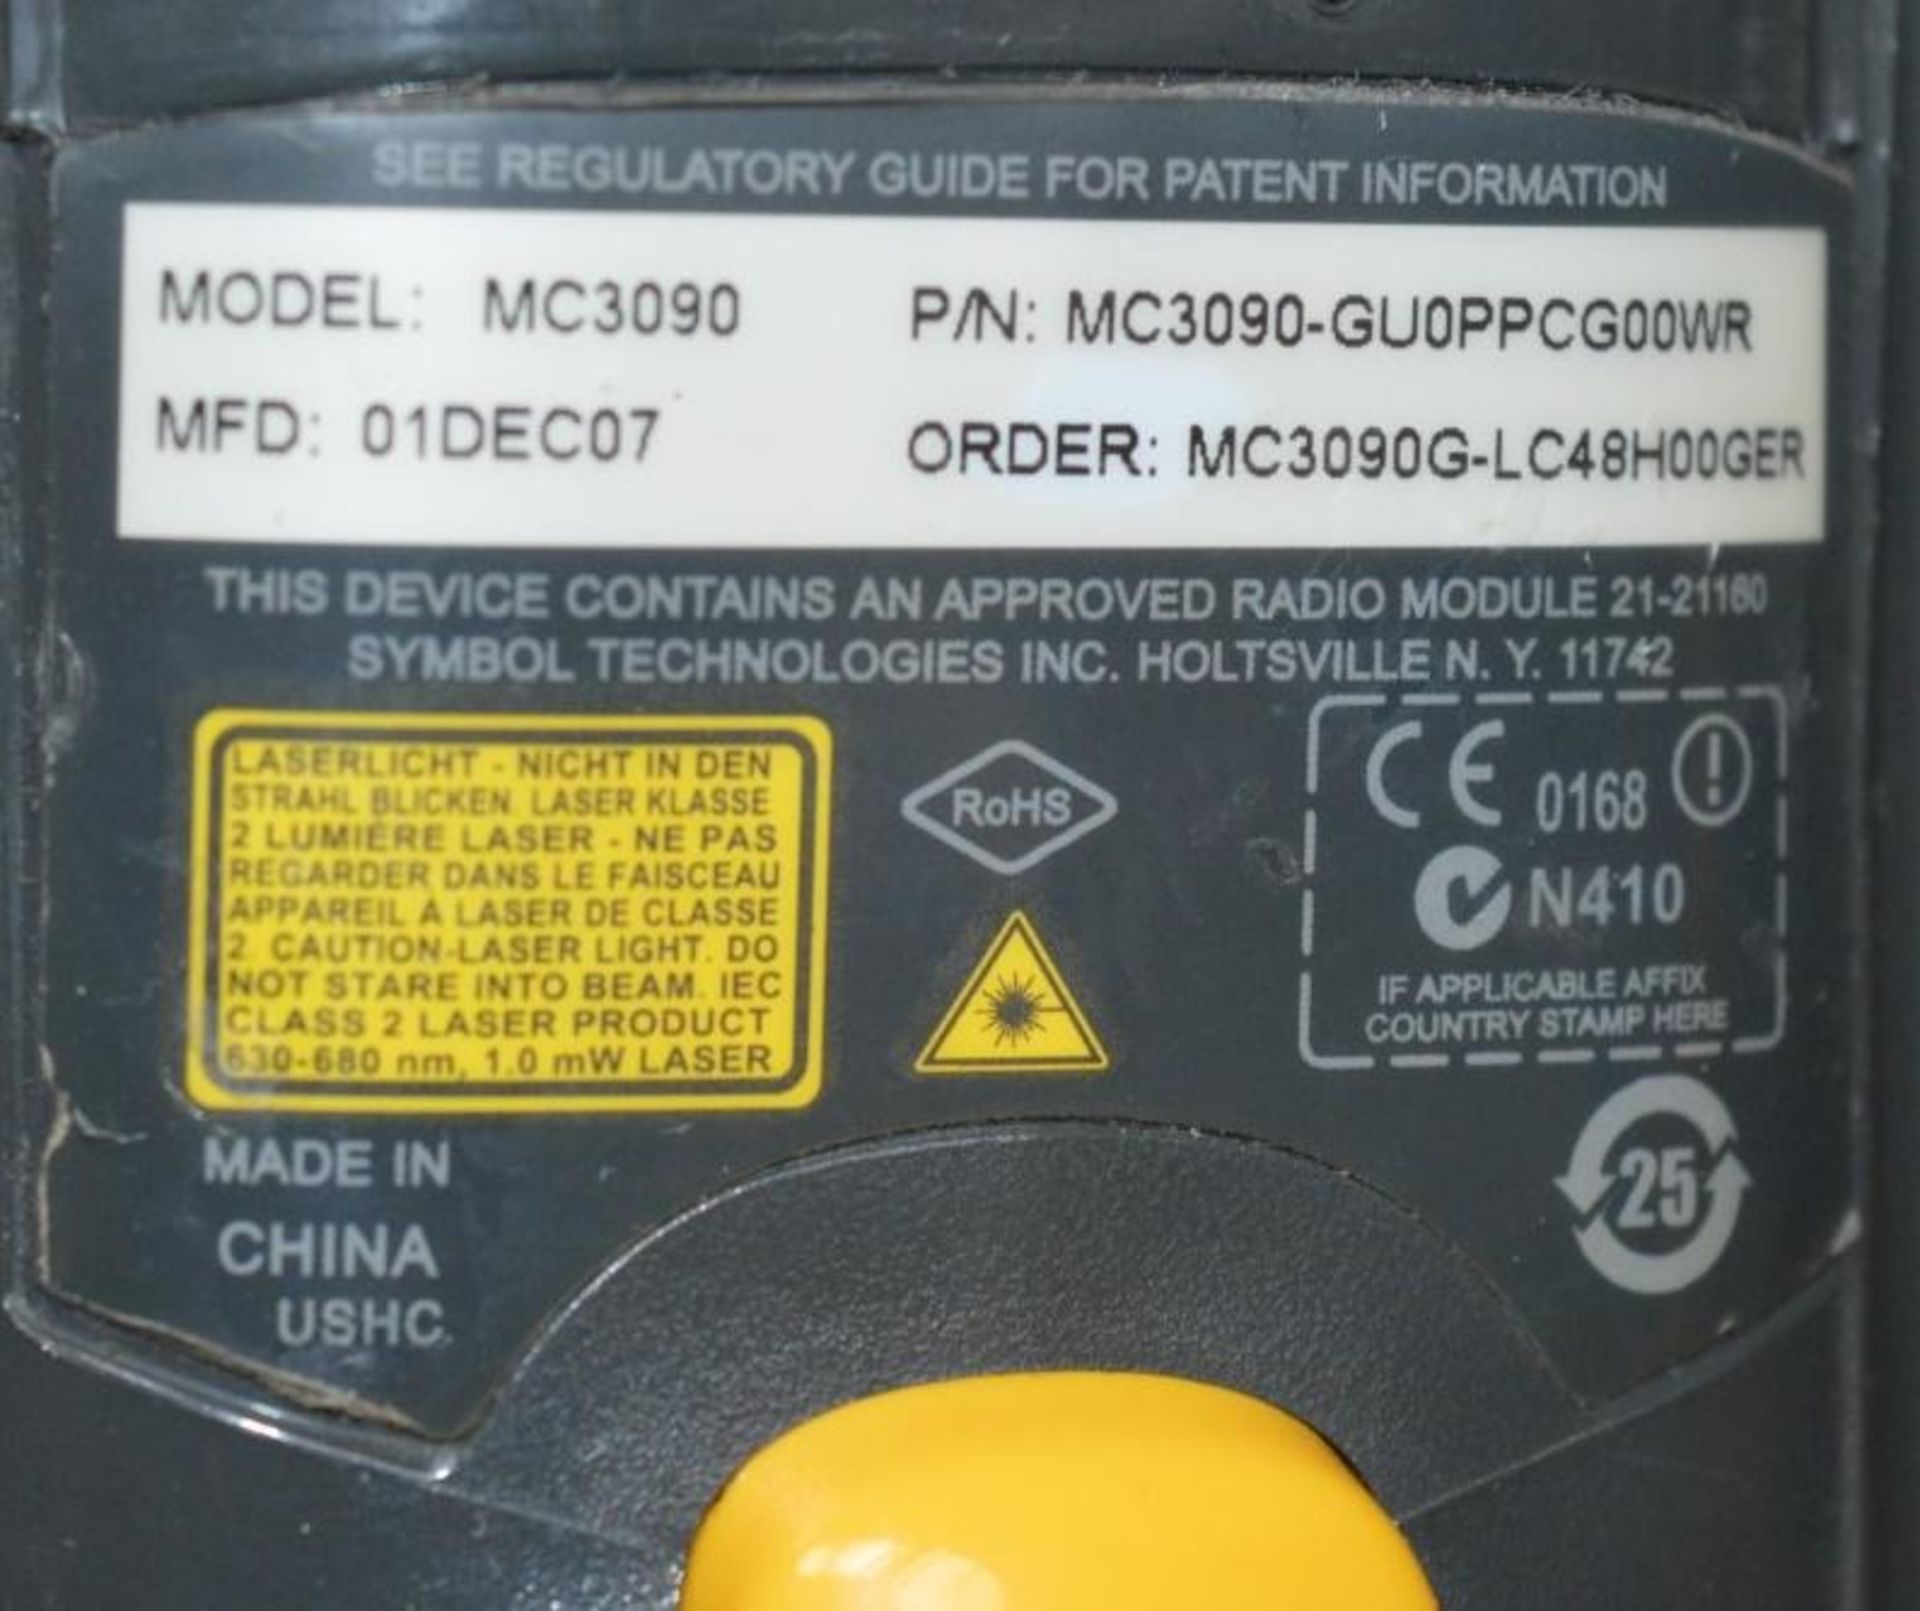 4 x Motorola Symbol MC3090 Handheld Barcode Scanners - Mobile Computer PDA - Includes Charging Dock, - Image 2 of 7